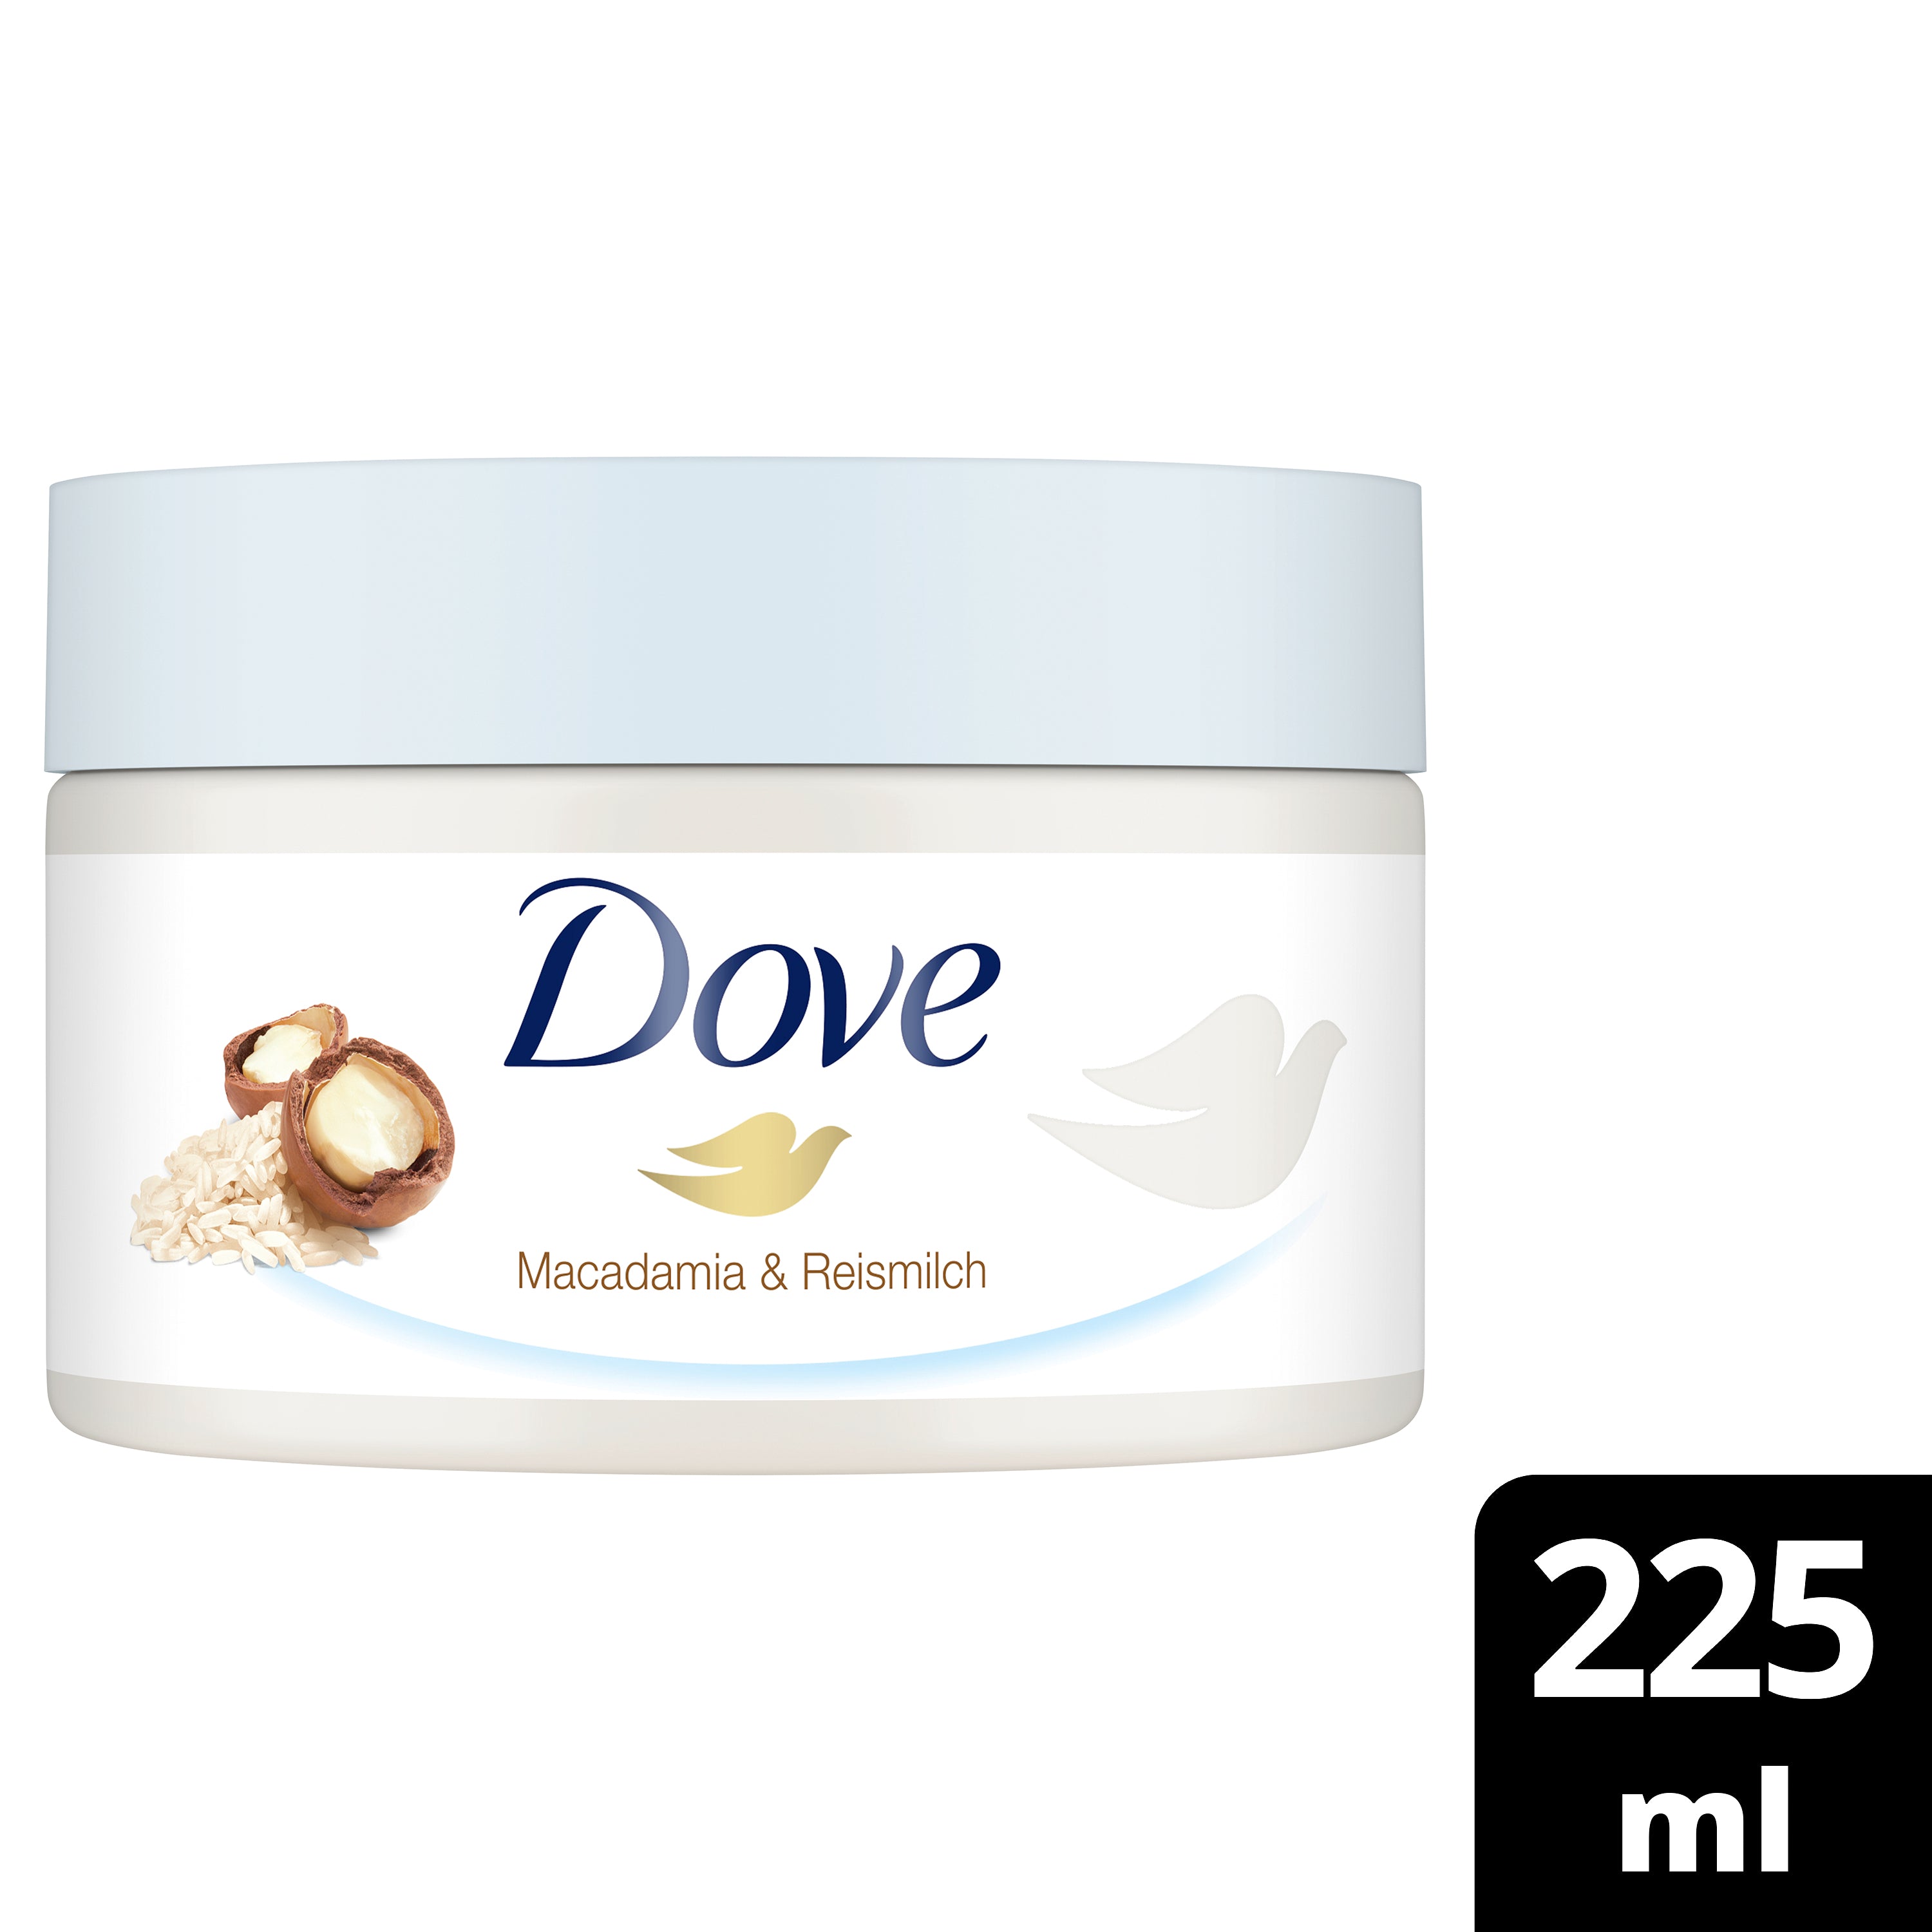 Dove Dusch-Peeling Macadamia & Reismilch 225 ml